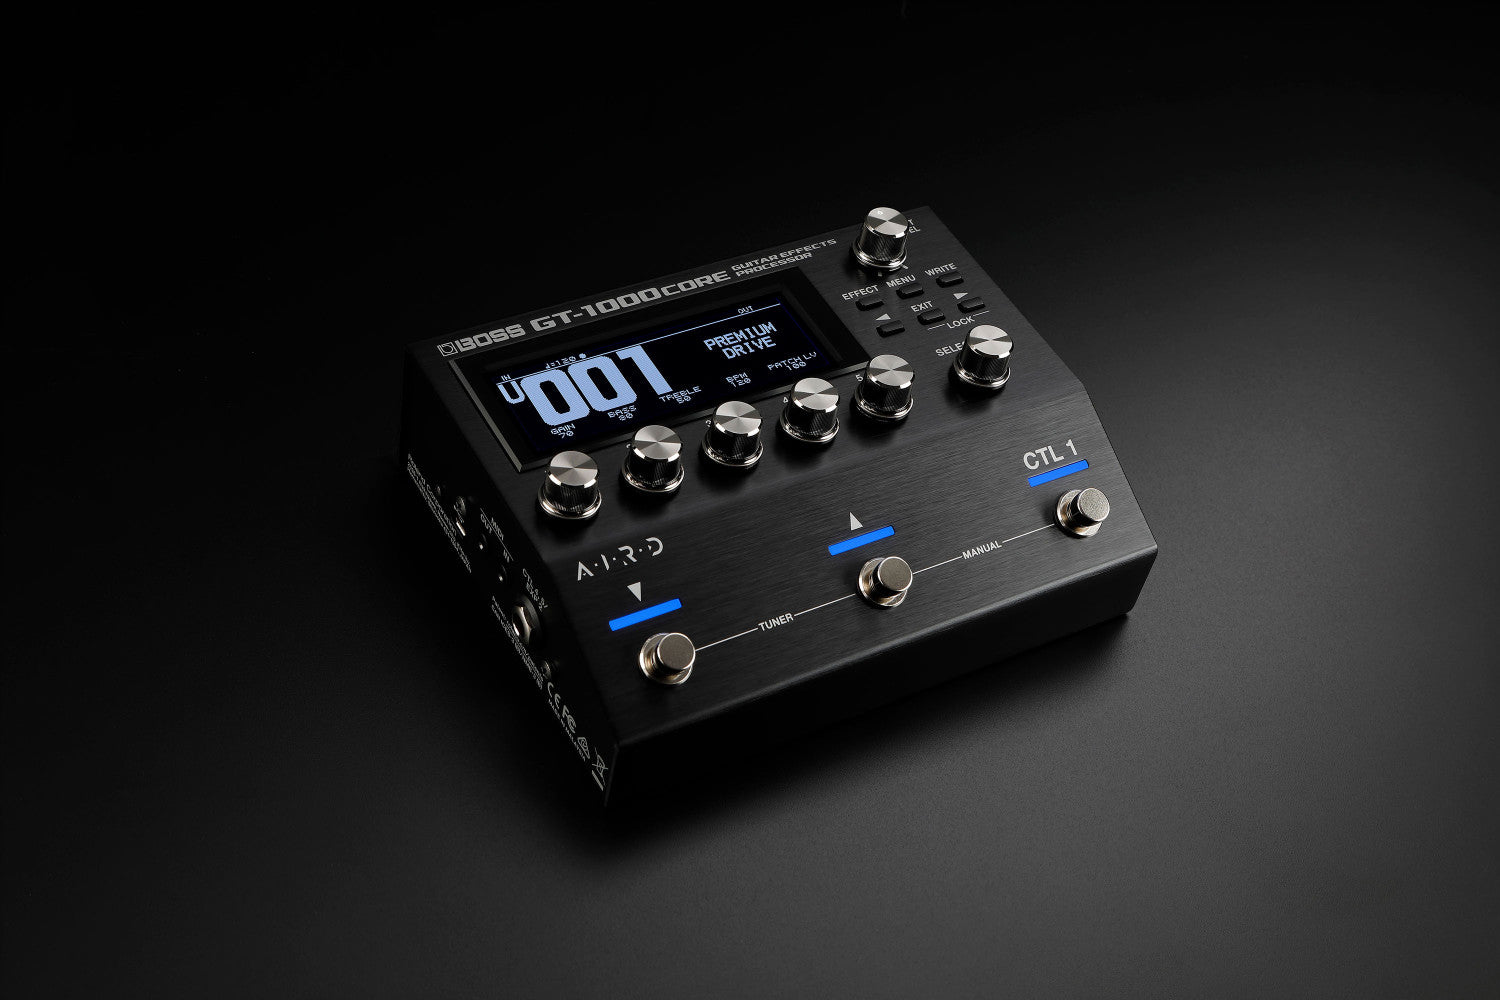 BOSS GT-1000CORE Guitar Effects Processor